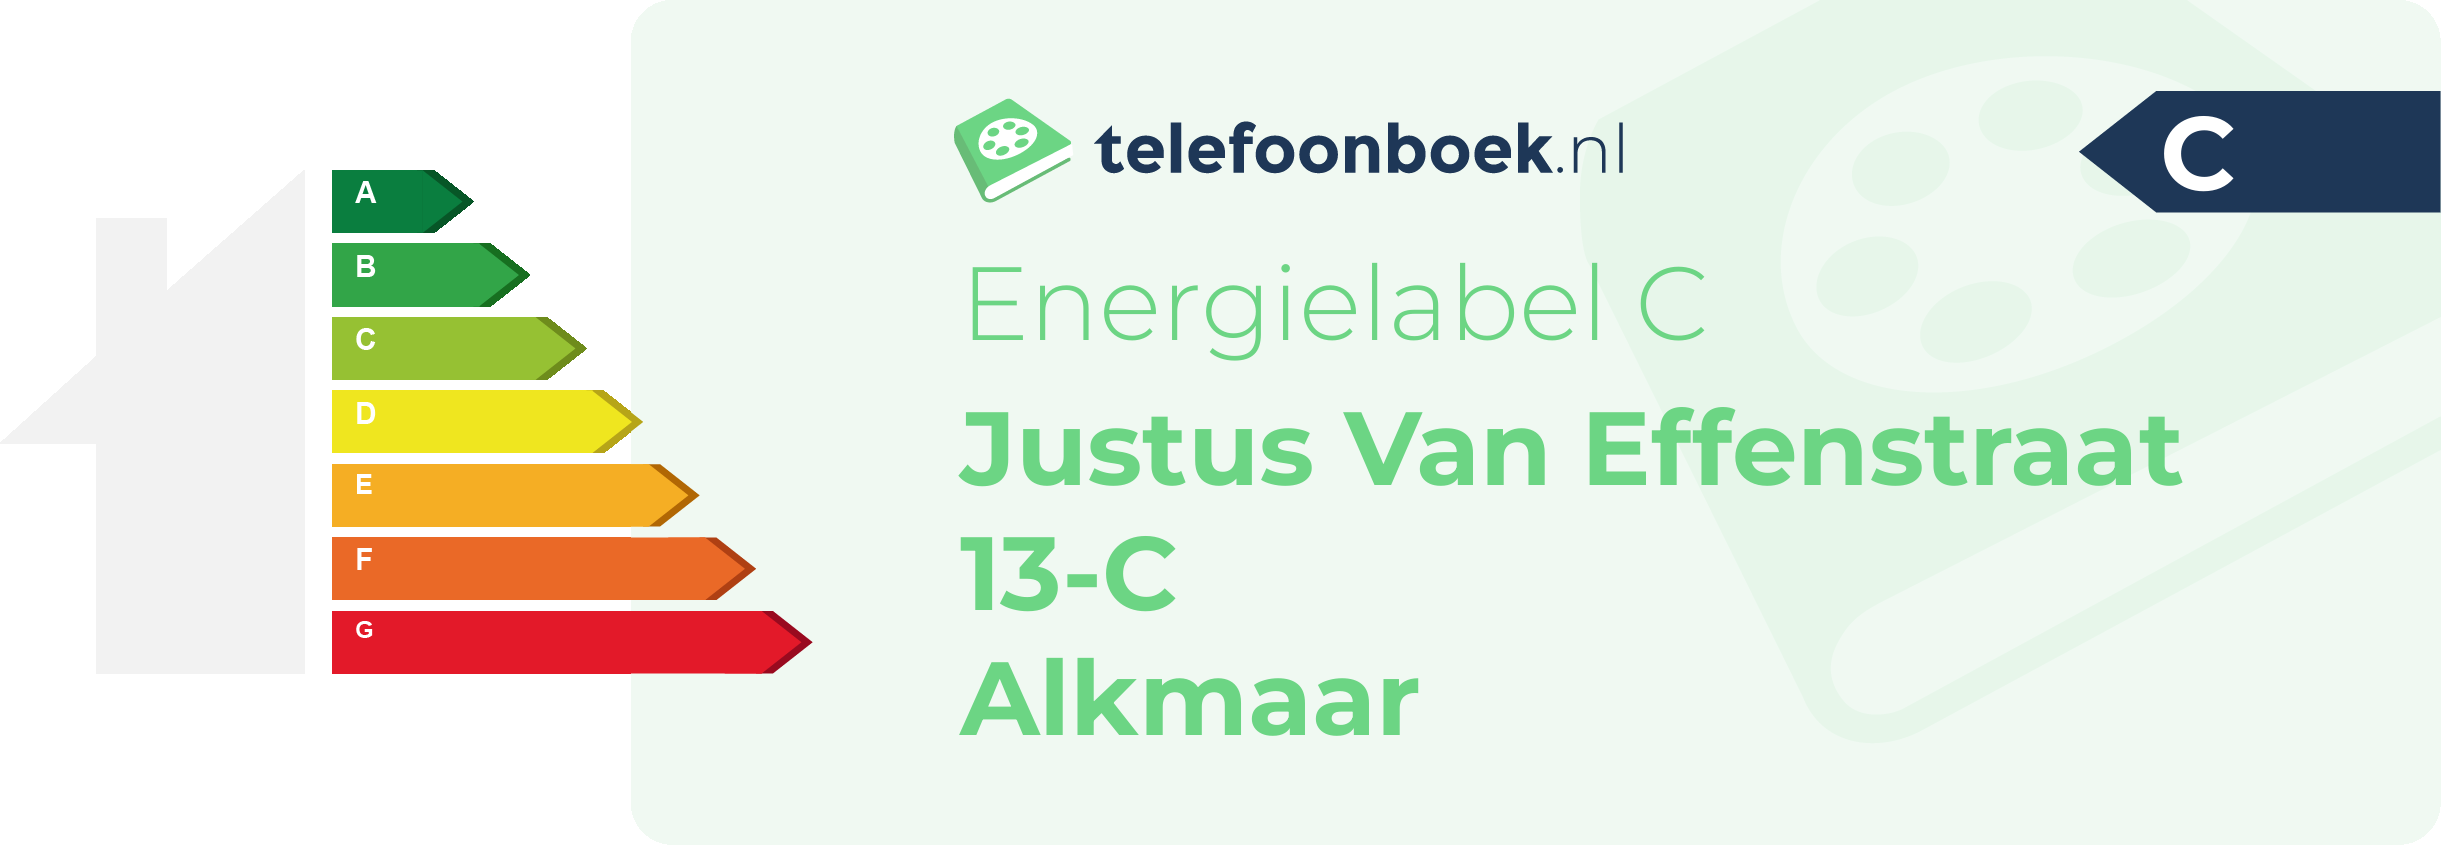 Energielabel Justus Van Effenstraat 13-C Alkmaar